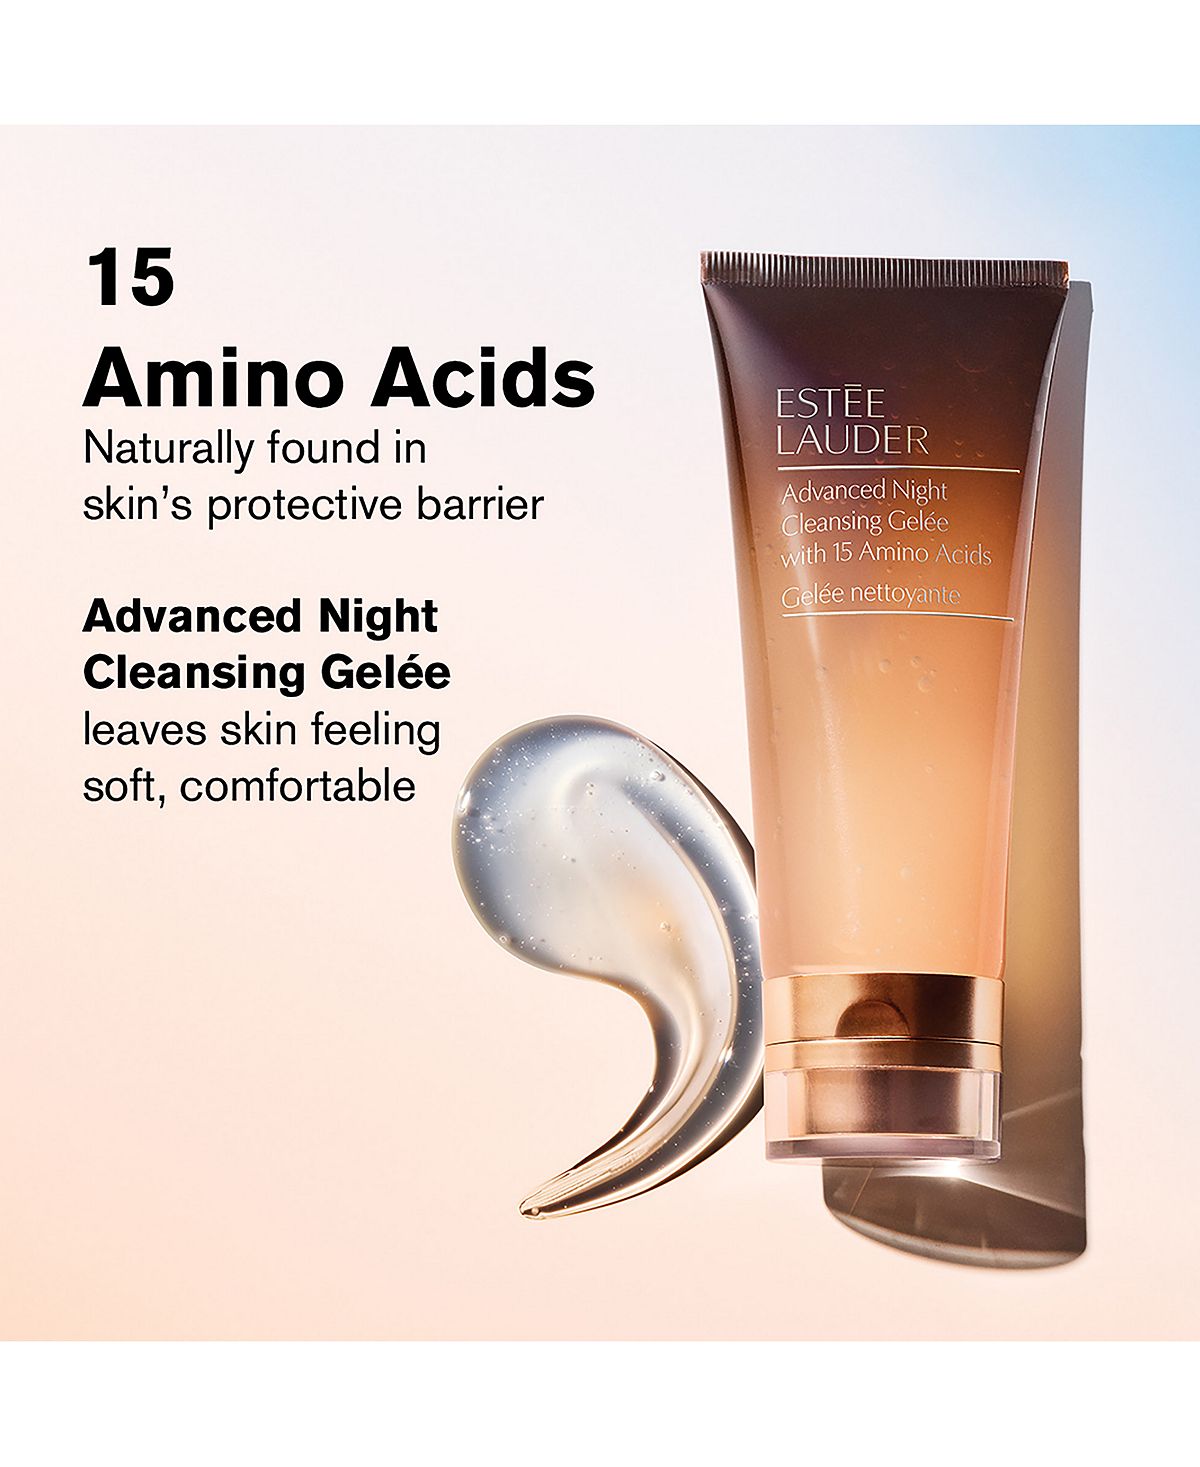 Estee Lauder Advanced Night Cleansing GeléeCleanser with 15 Amino Acids